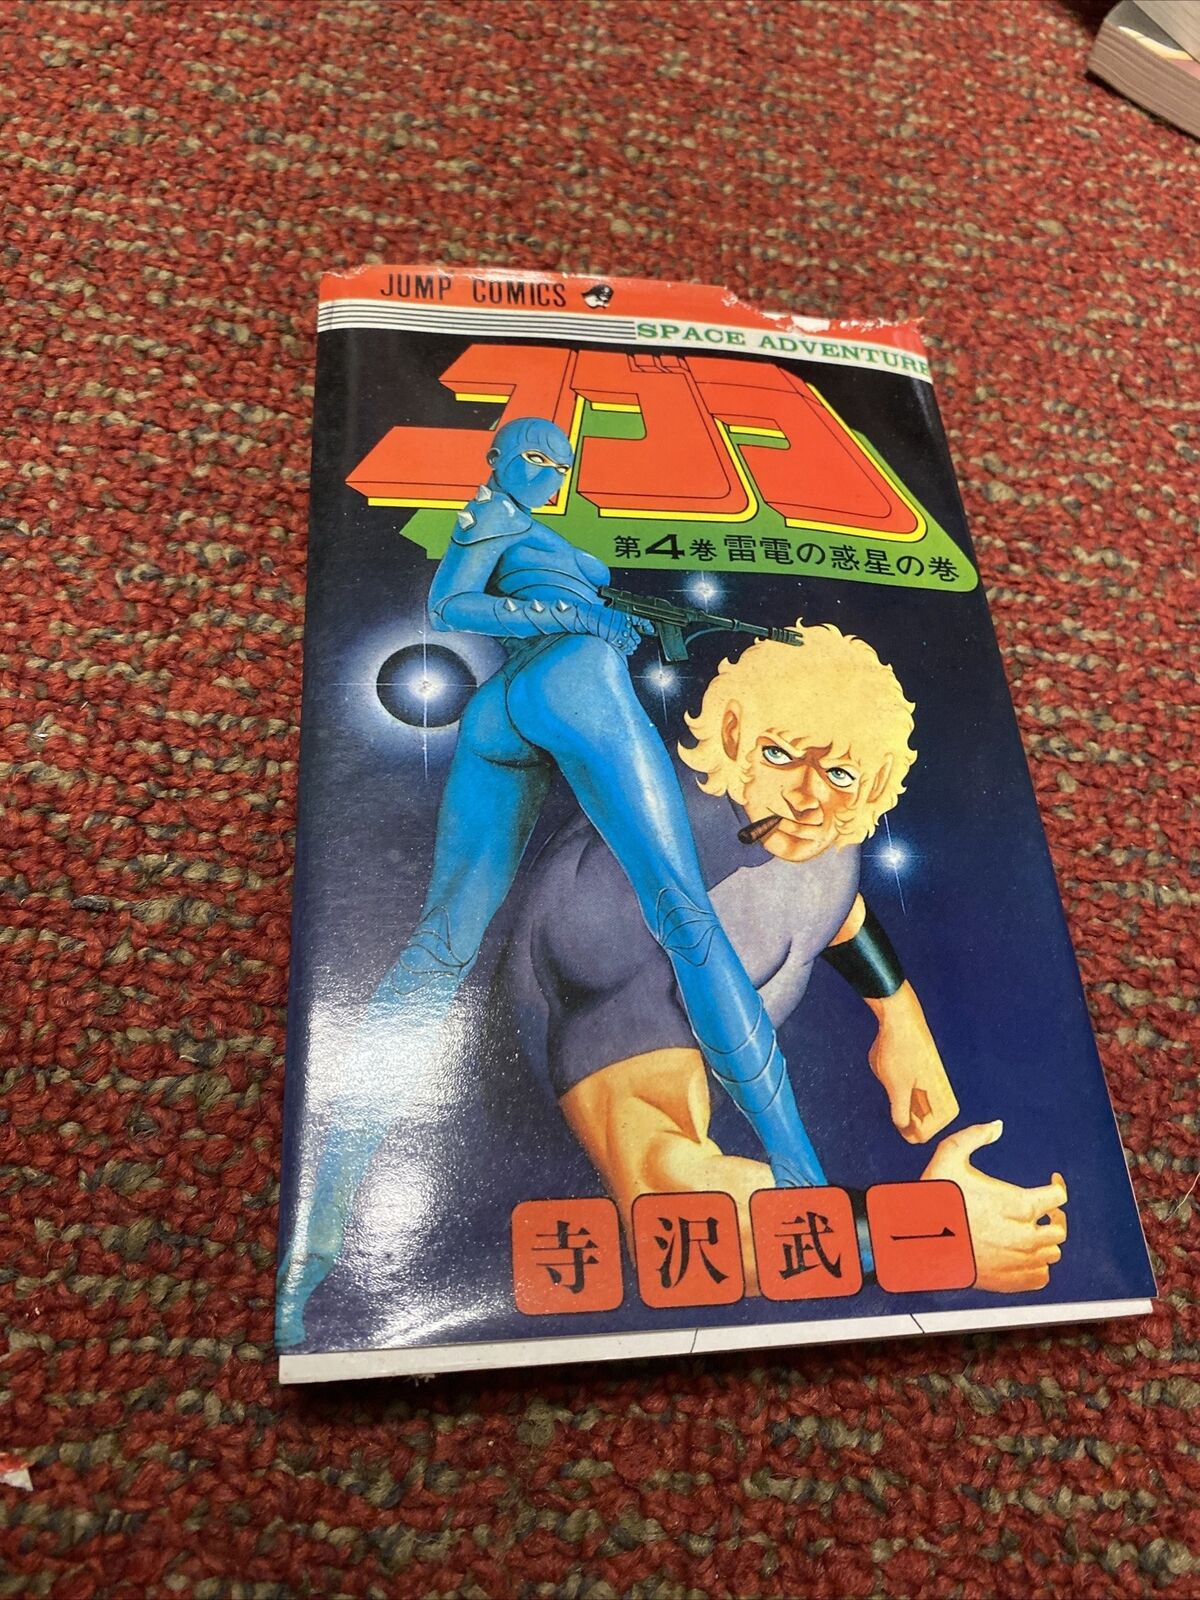 Space Adventure Cobra 1978 Japanese Manga #4 Jump Comics